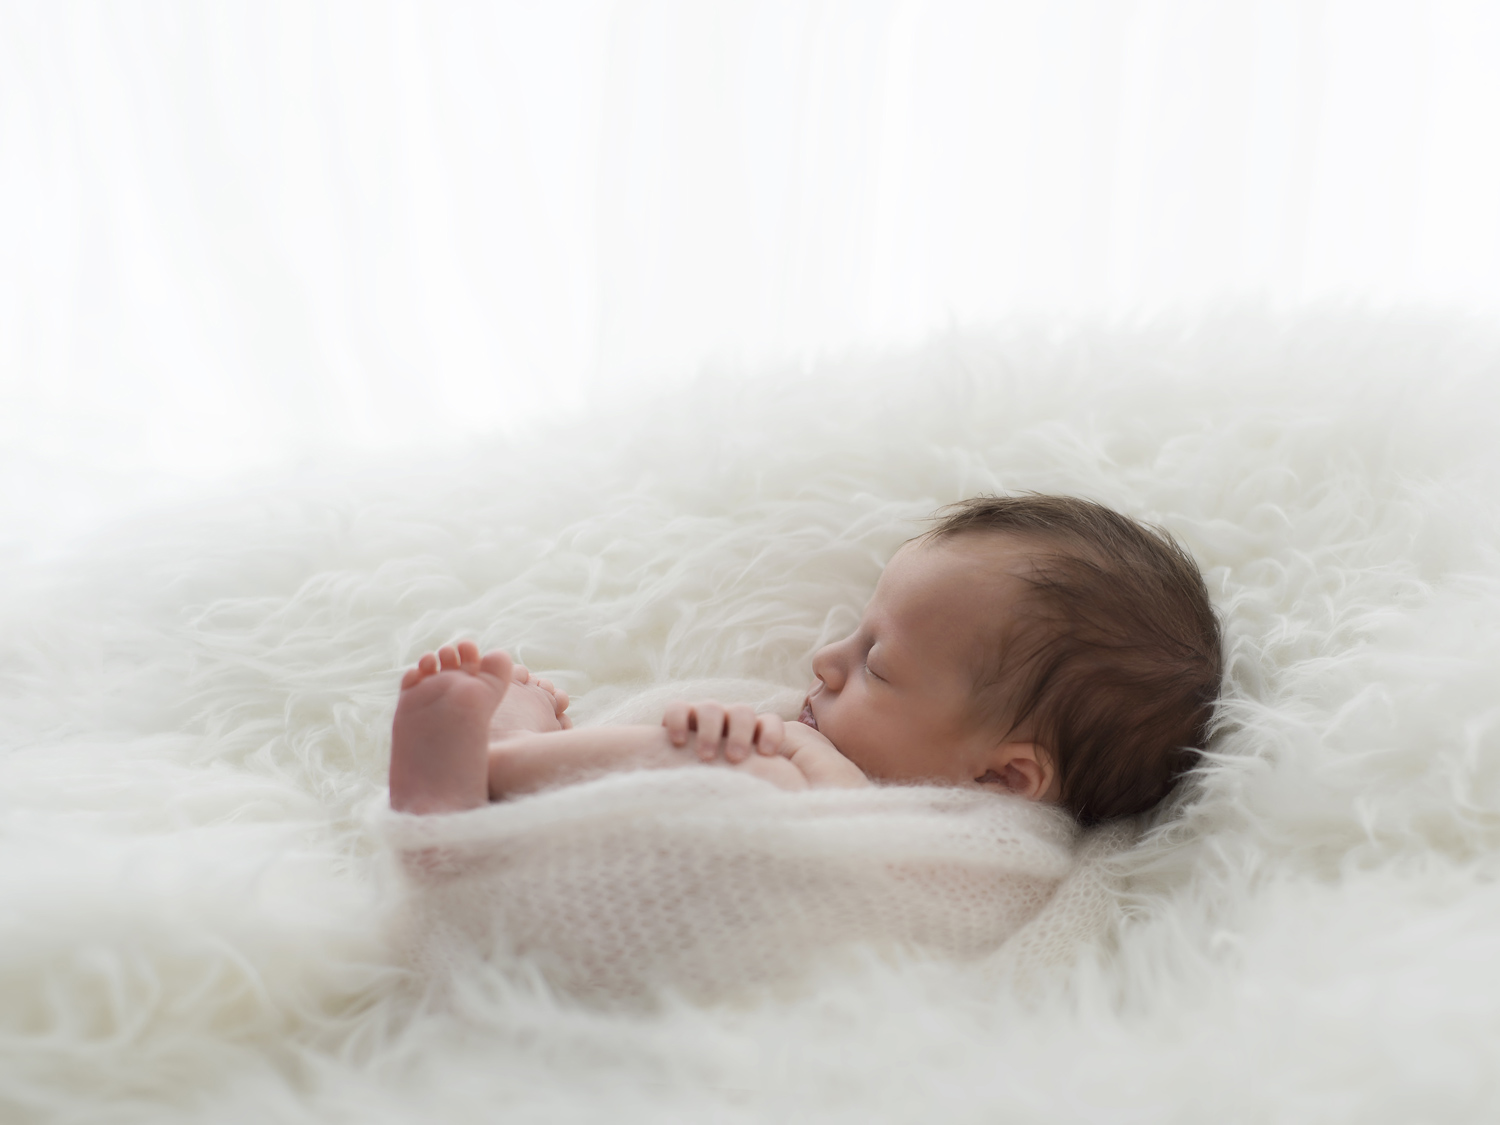 Newborn baby curled